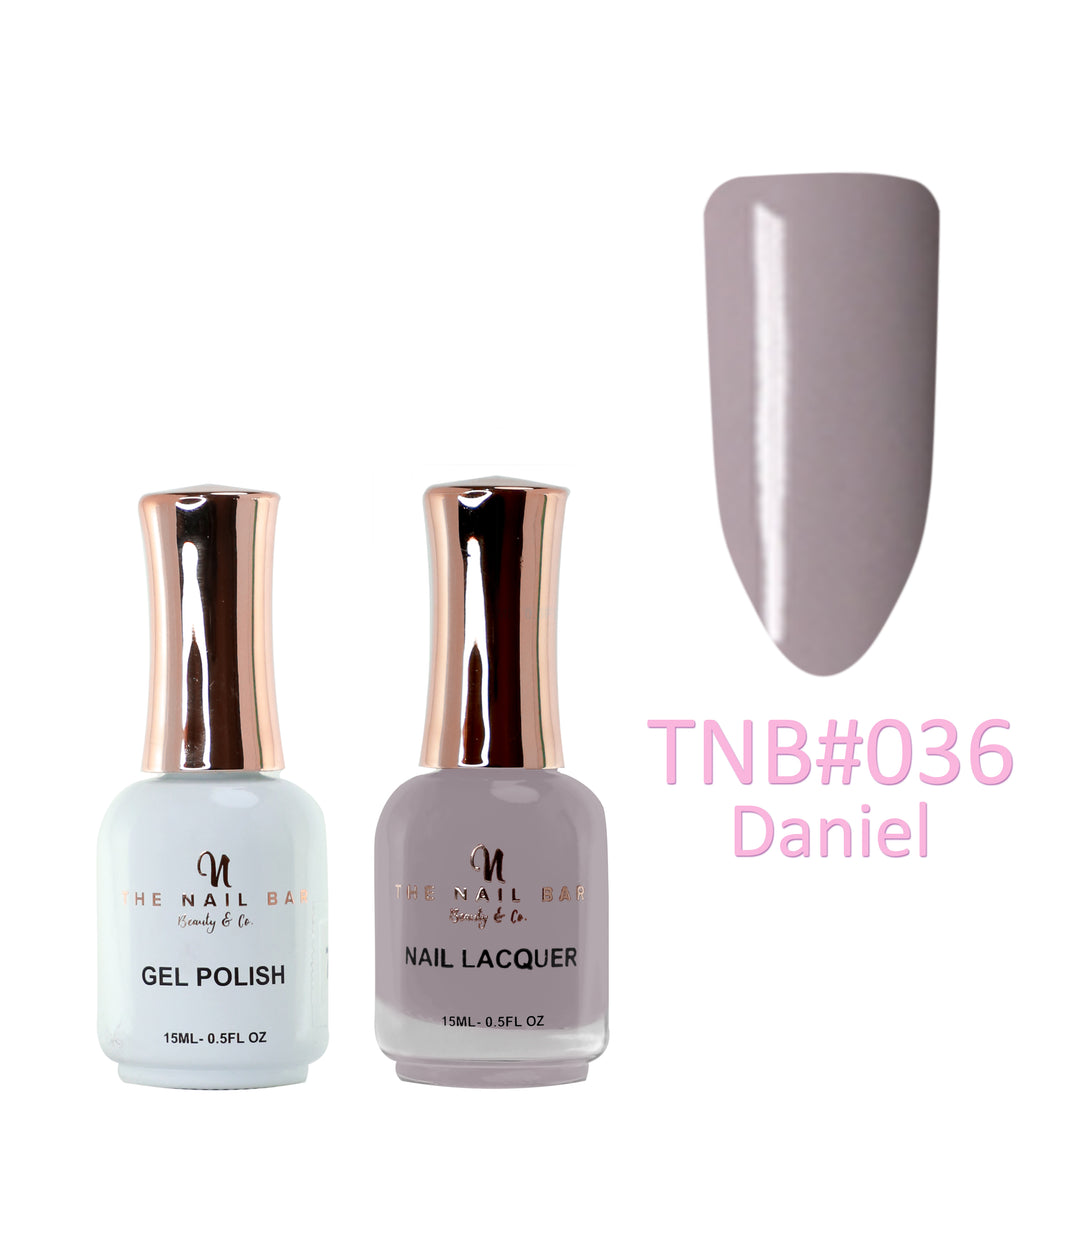 Dual Polish/Gel colour matching (15ml) - Daniel - The Nail Bar Beauty & Co.